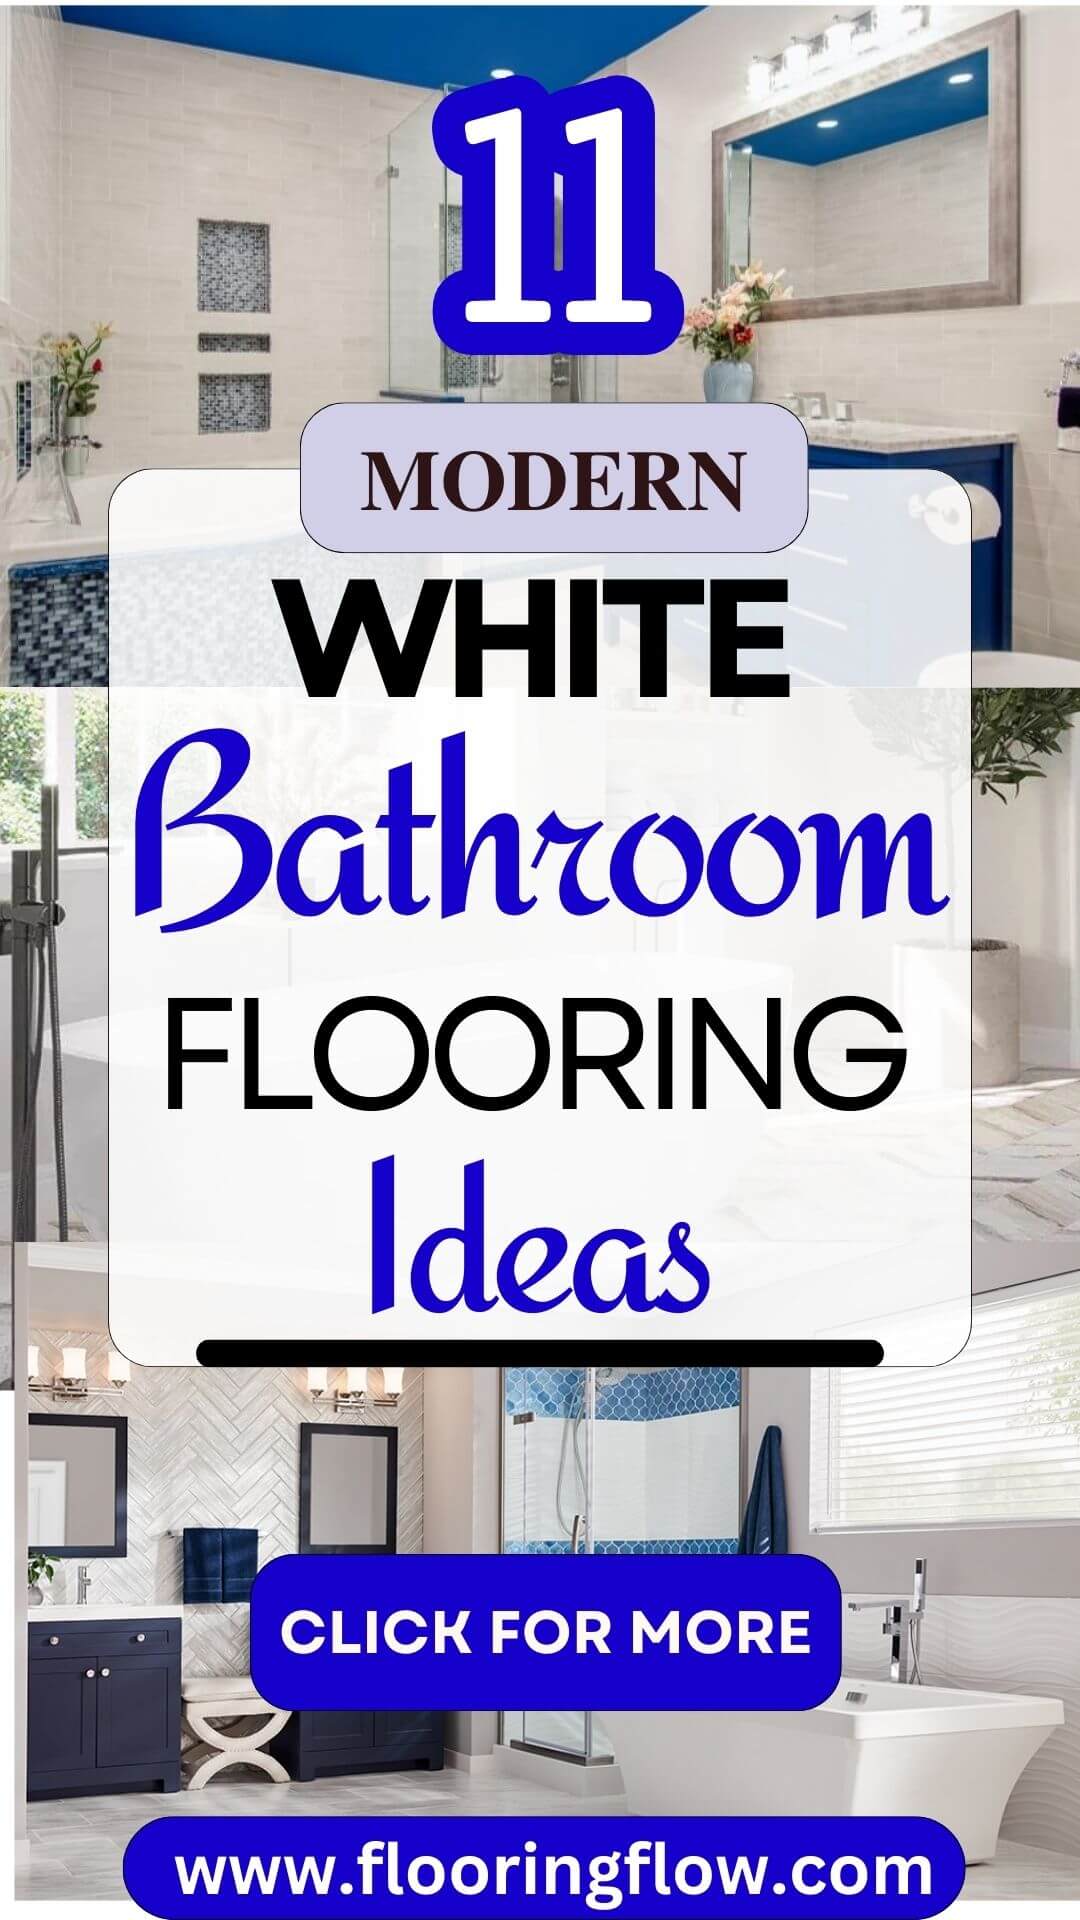 White Bathroom Flooring Ideas